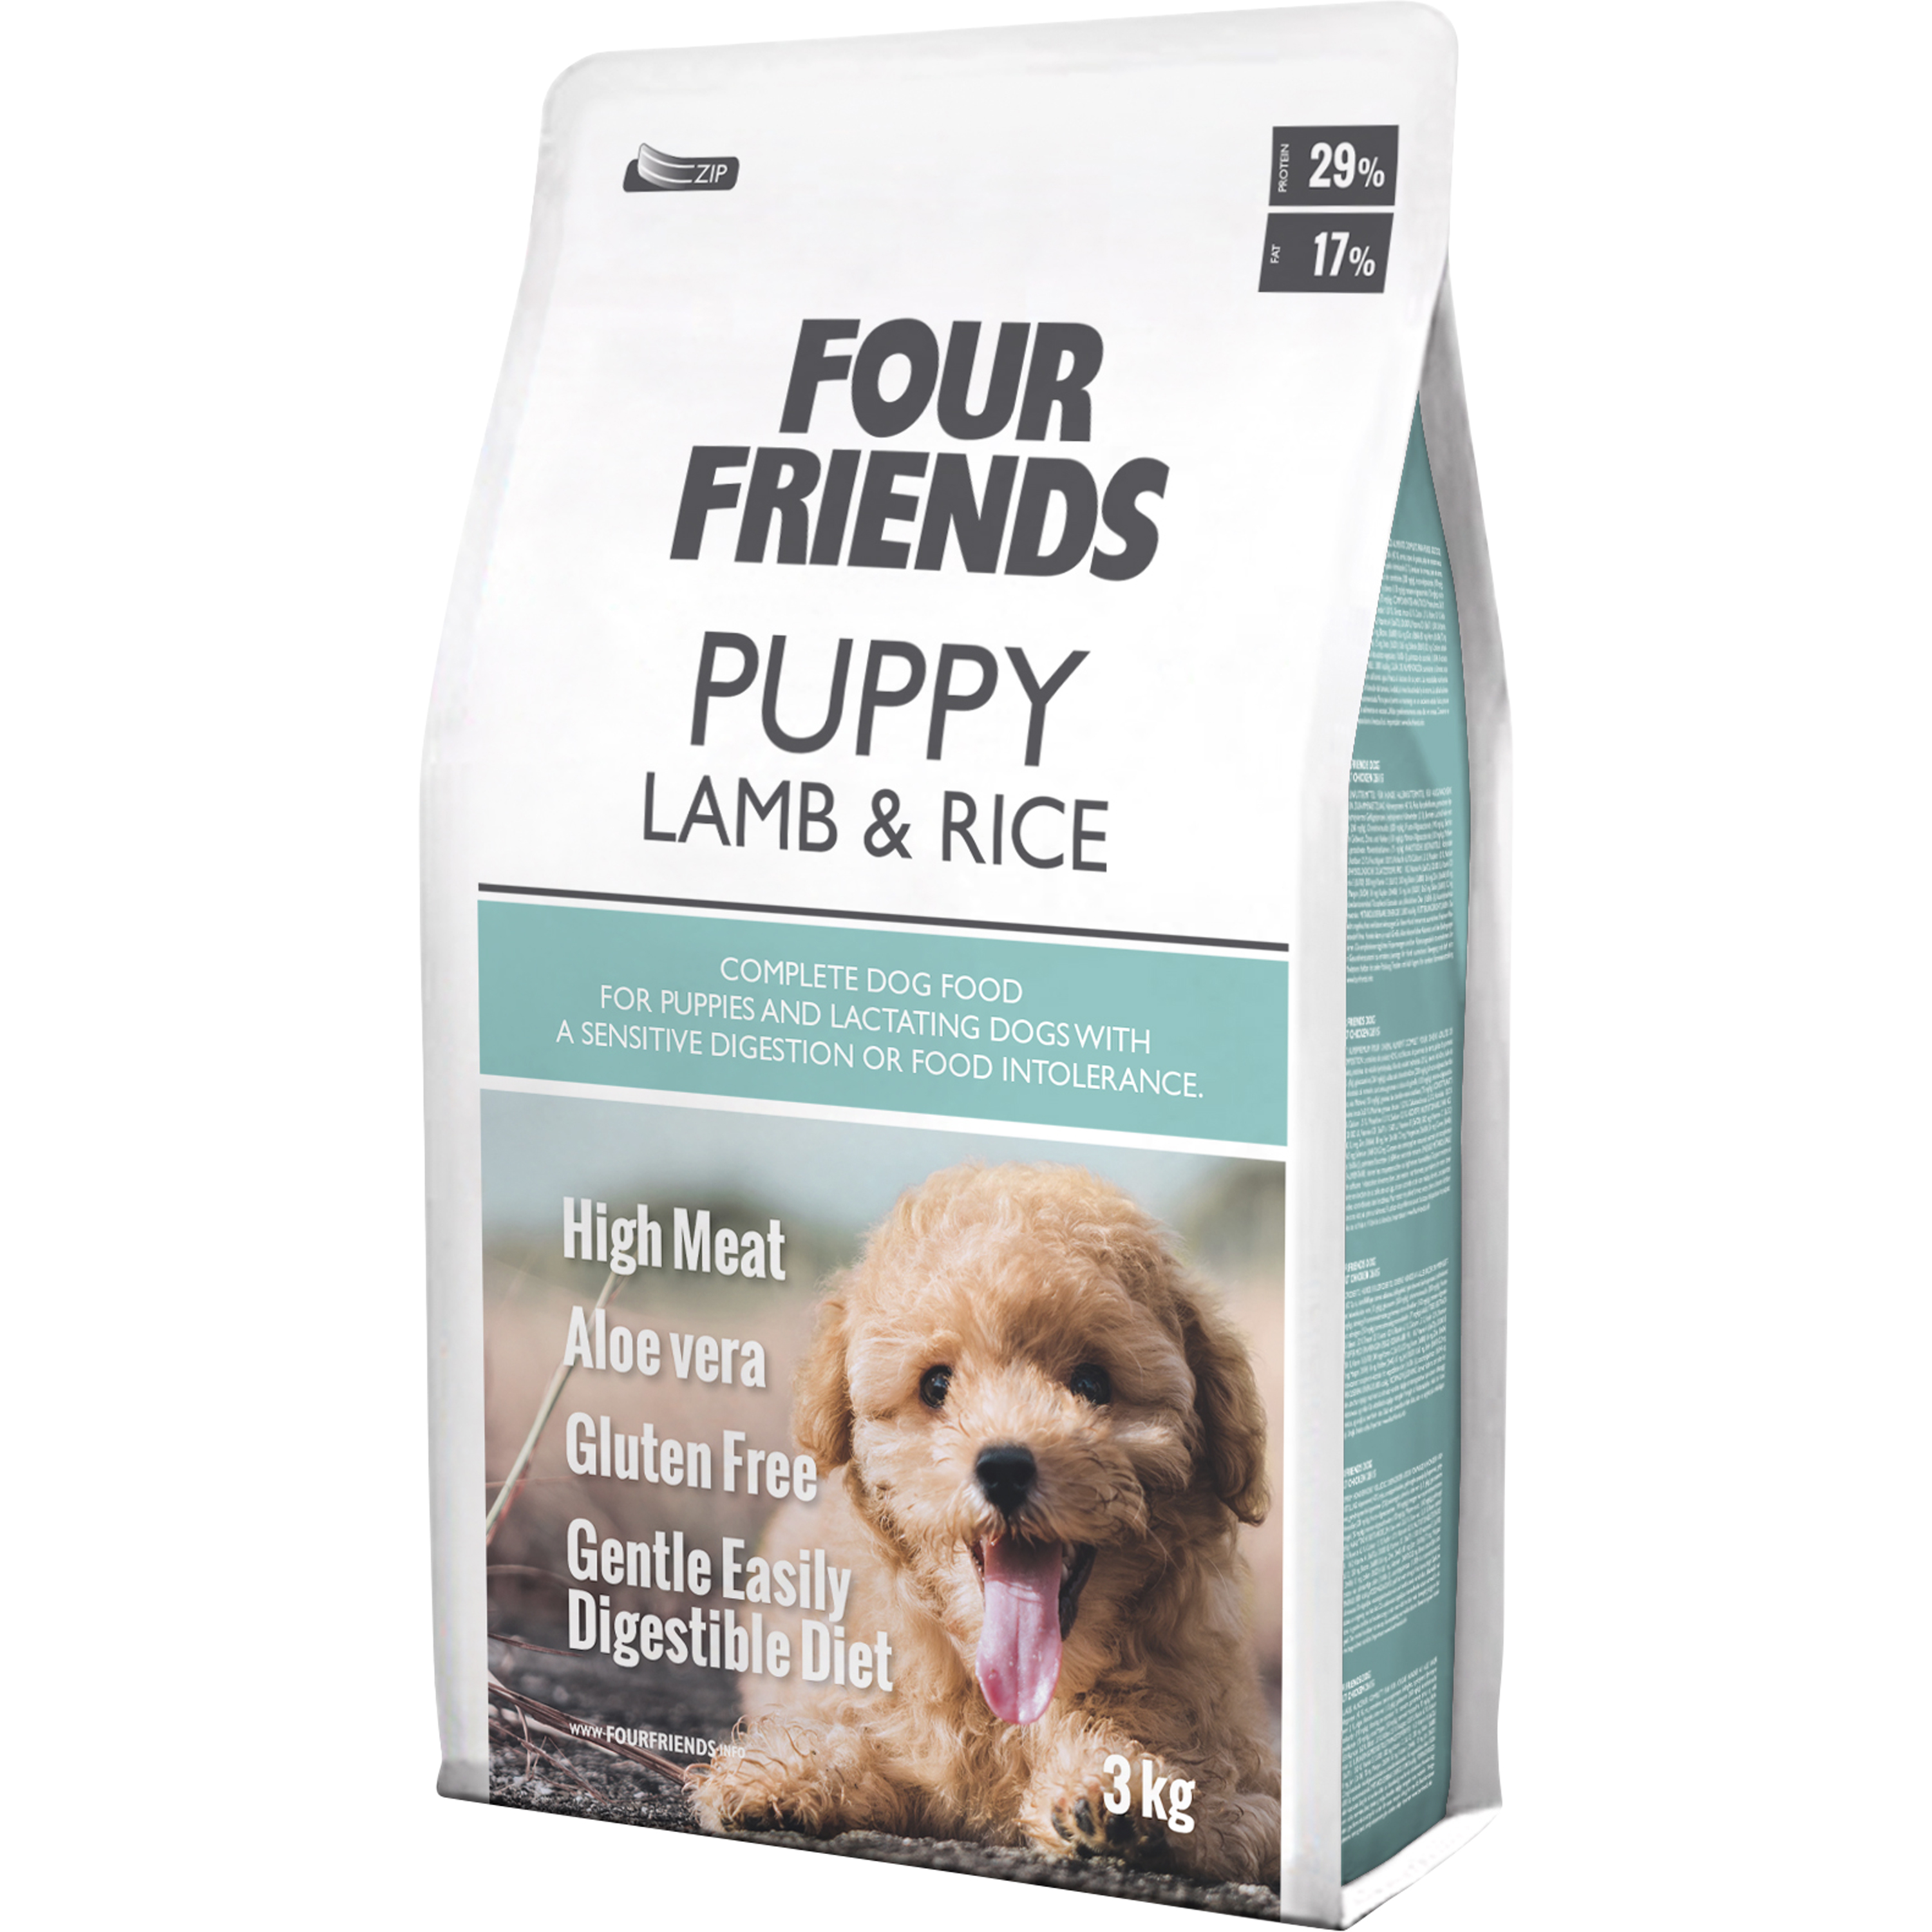 Valpfoder Four Friends Puppy Lamb & Rice 3kg